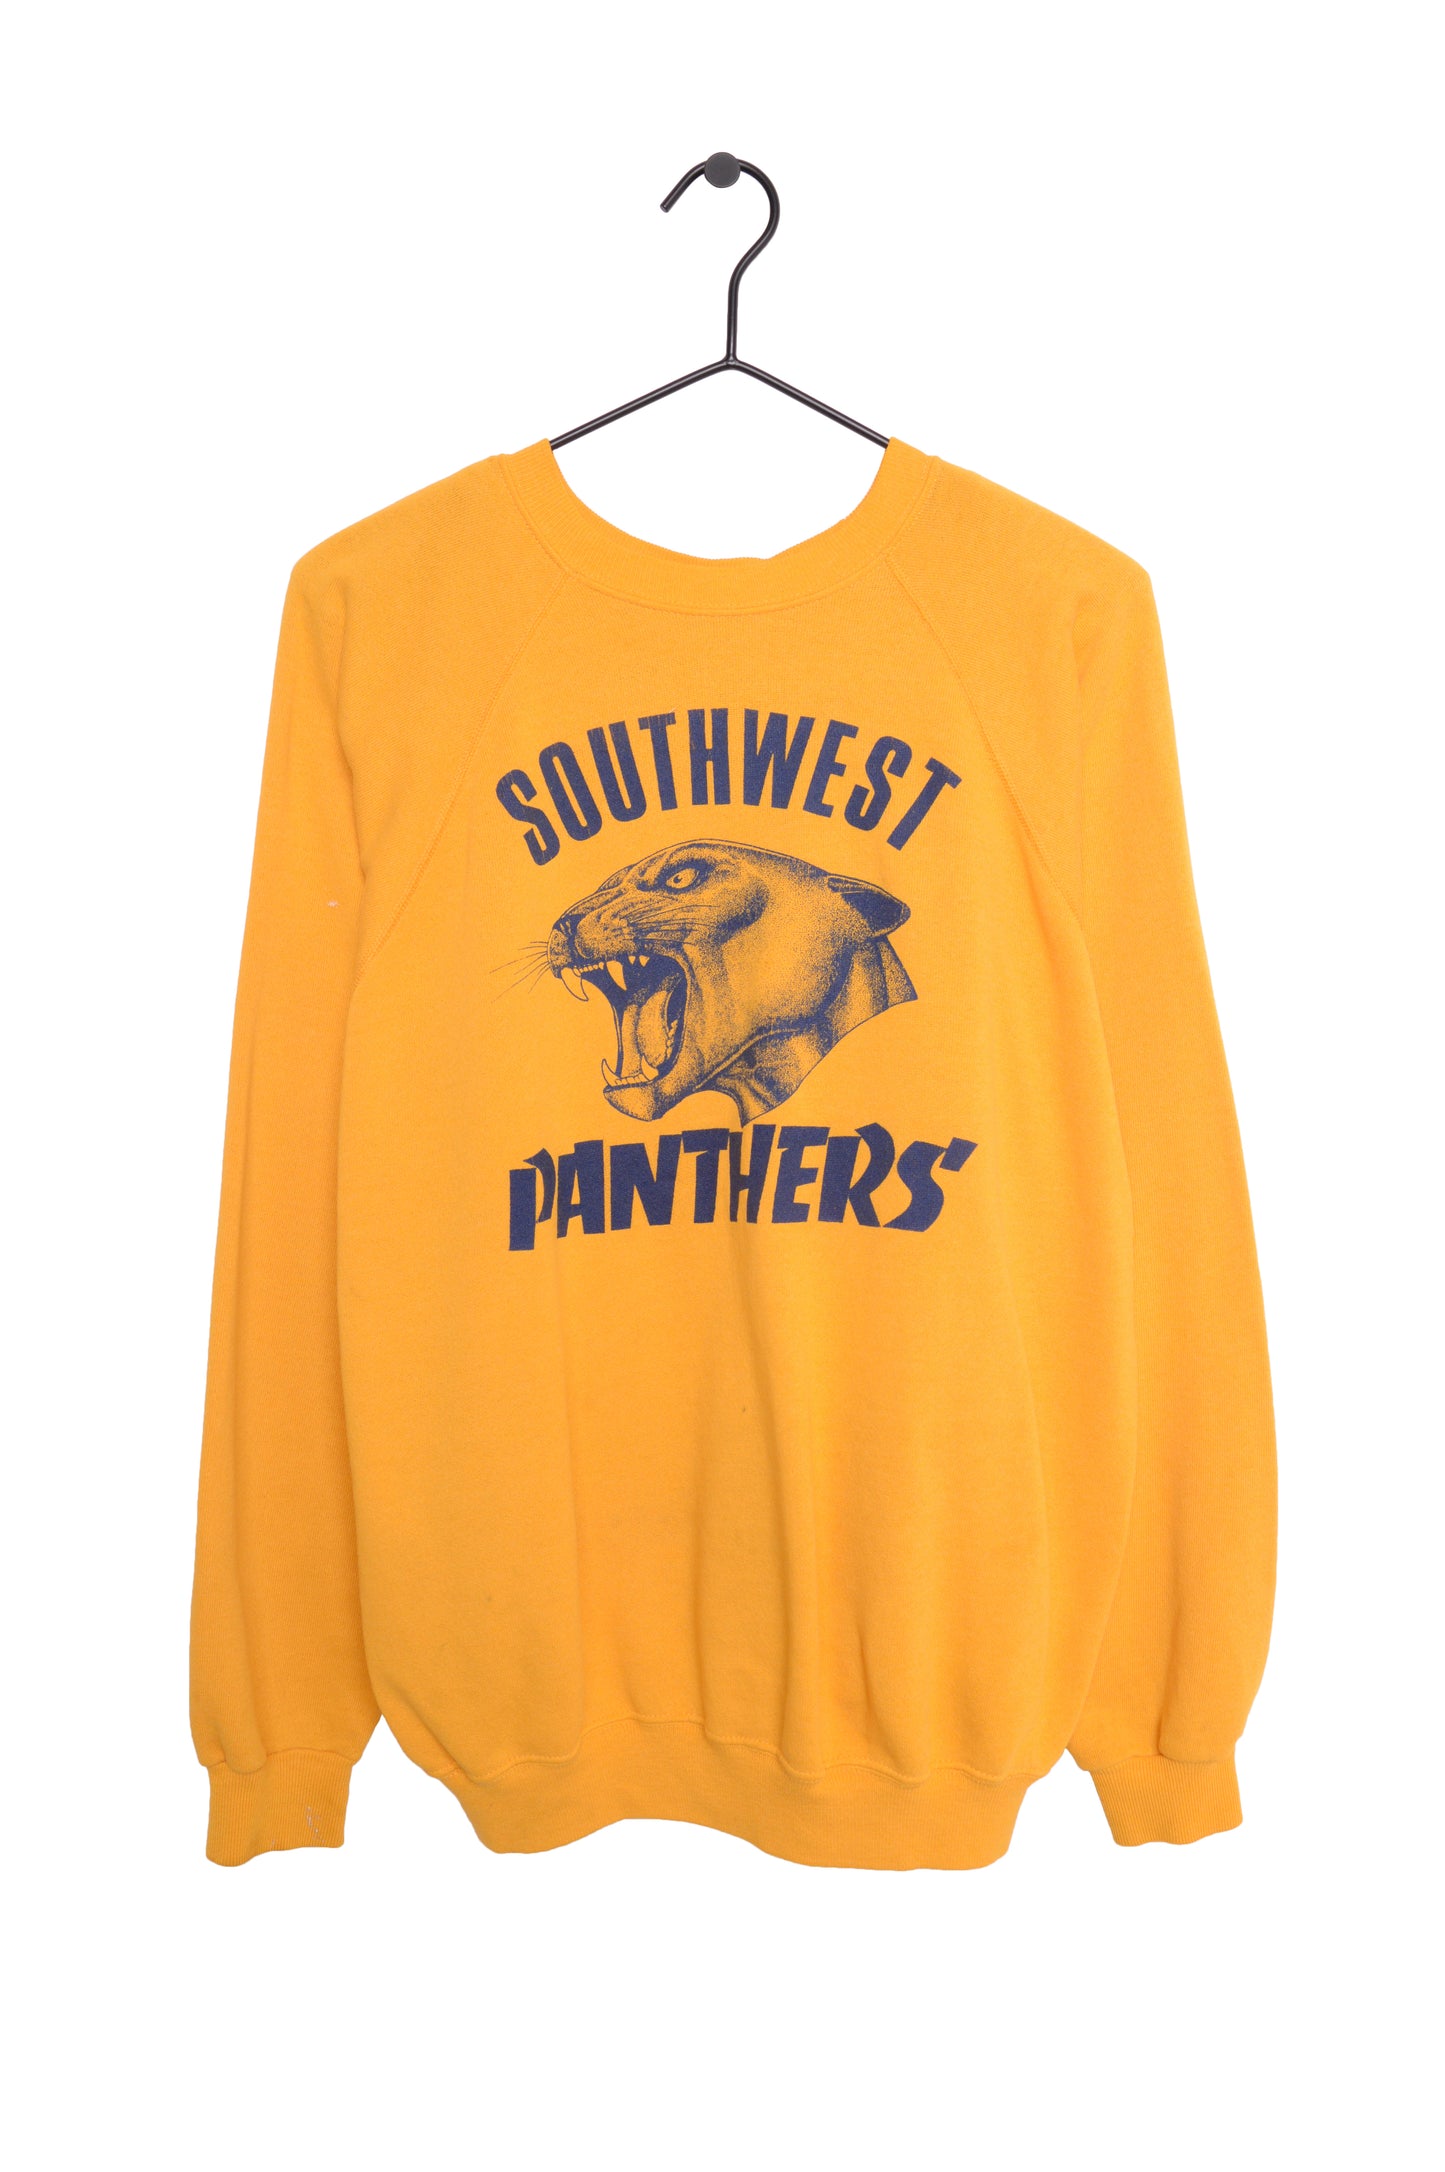 1980s Southwest Panthers Sweatshirt